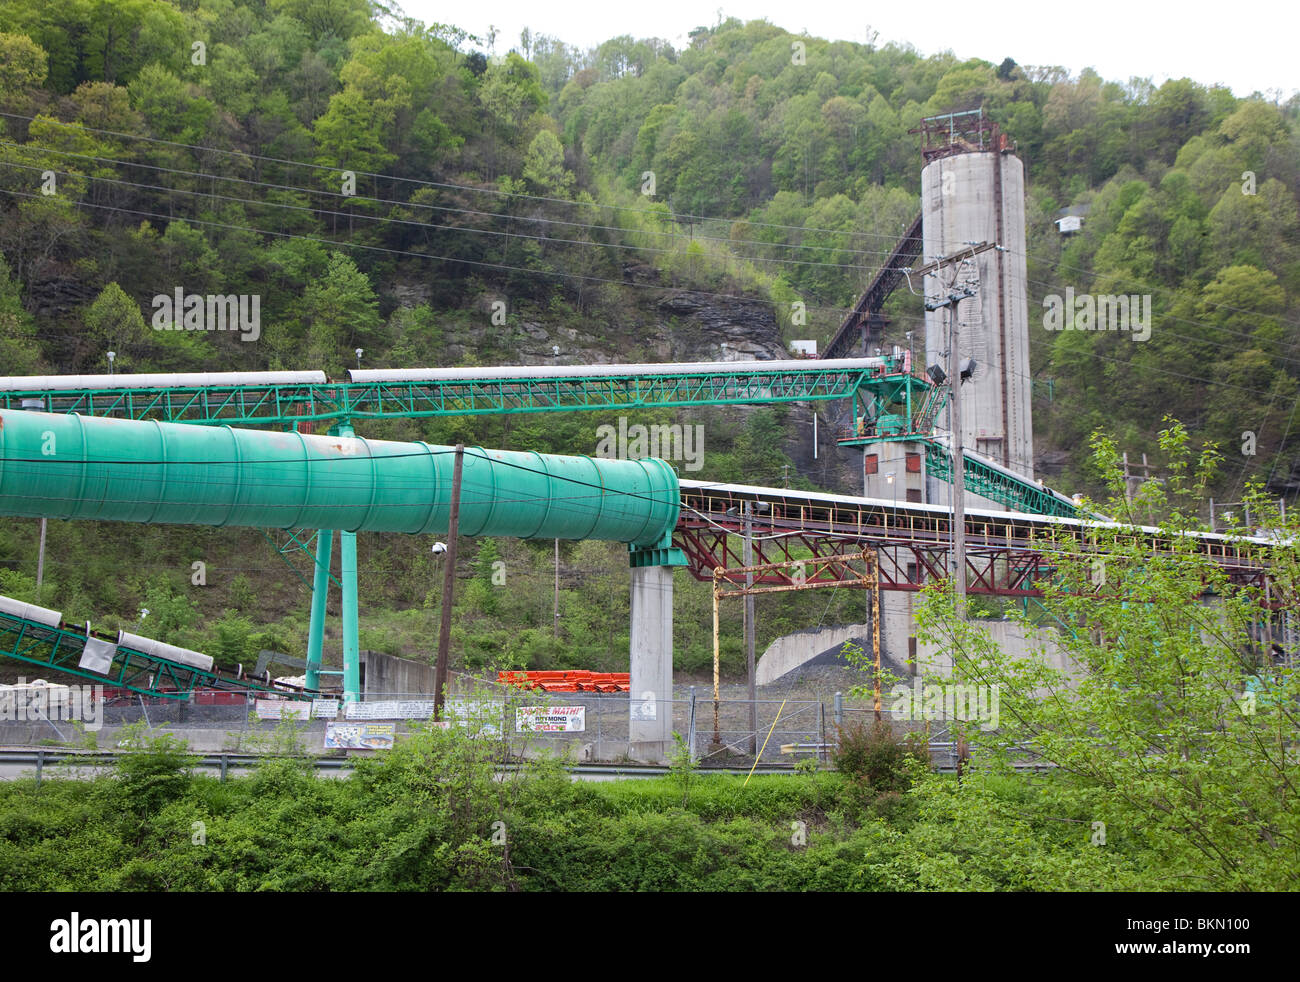 Oberen großen Ast Coal Mine, Ort der Explosion, dass getötet 29 Bergleute Stockfoto